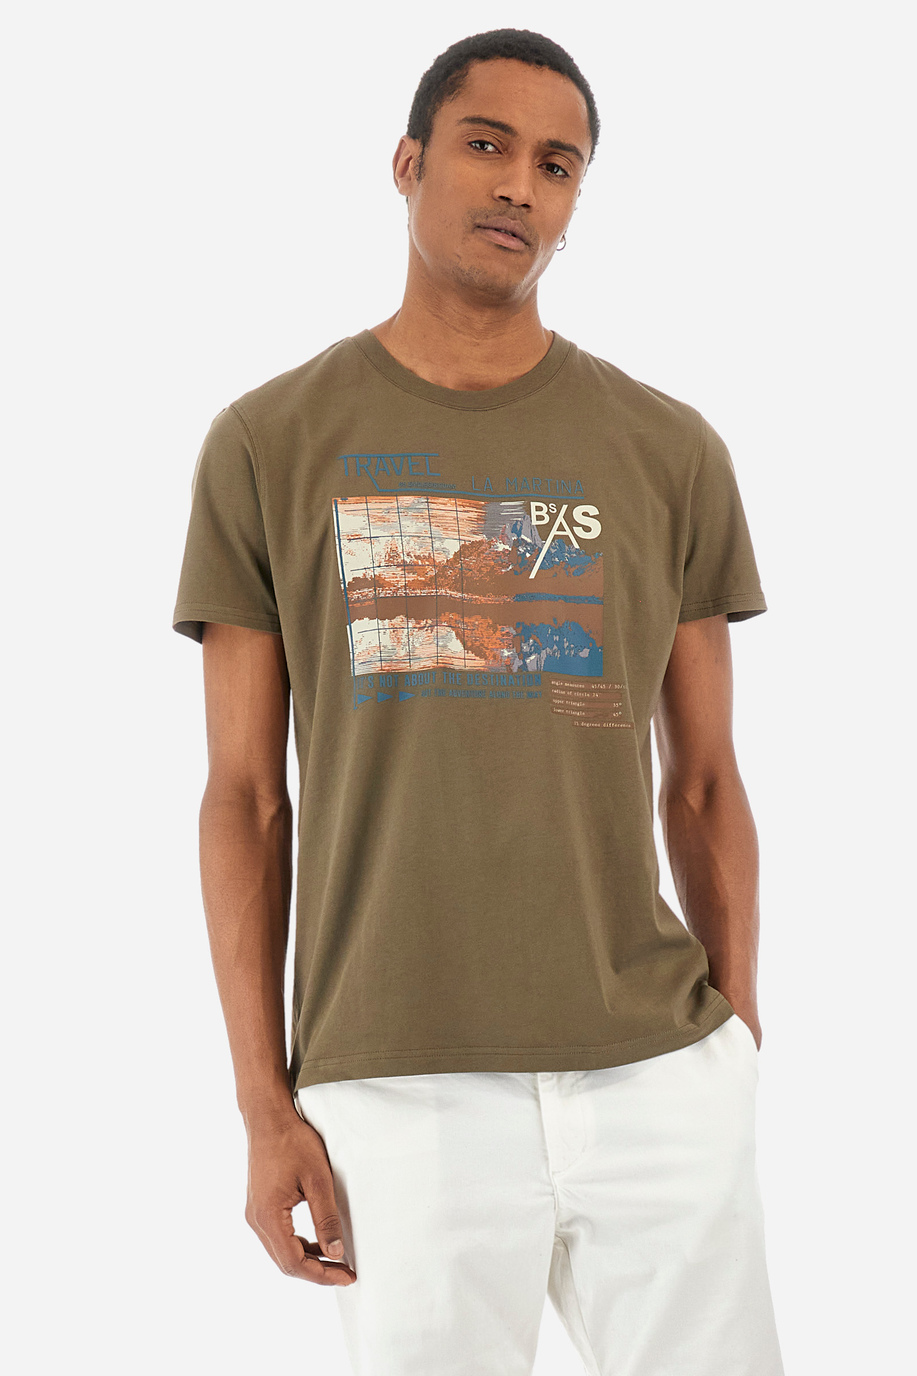 T-shirt regular fit in cotone - Yolotli - Capsule | La Martina - Official Online Shop